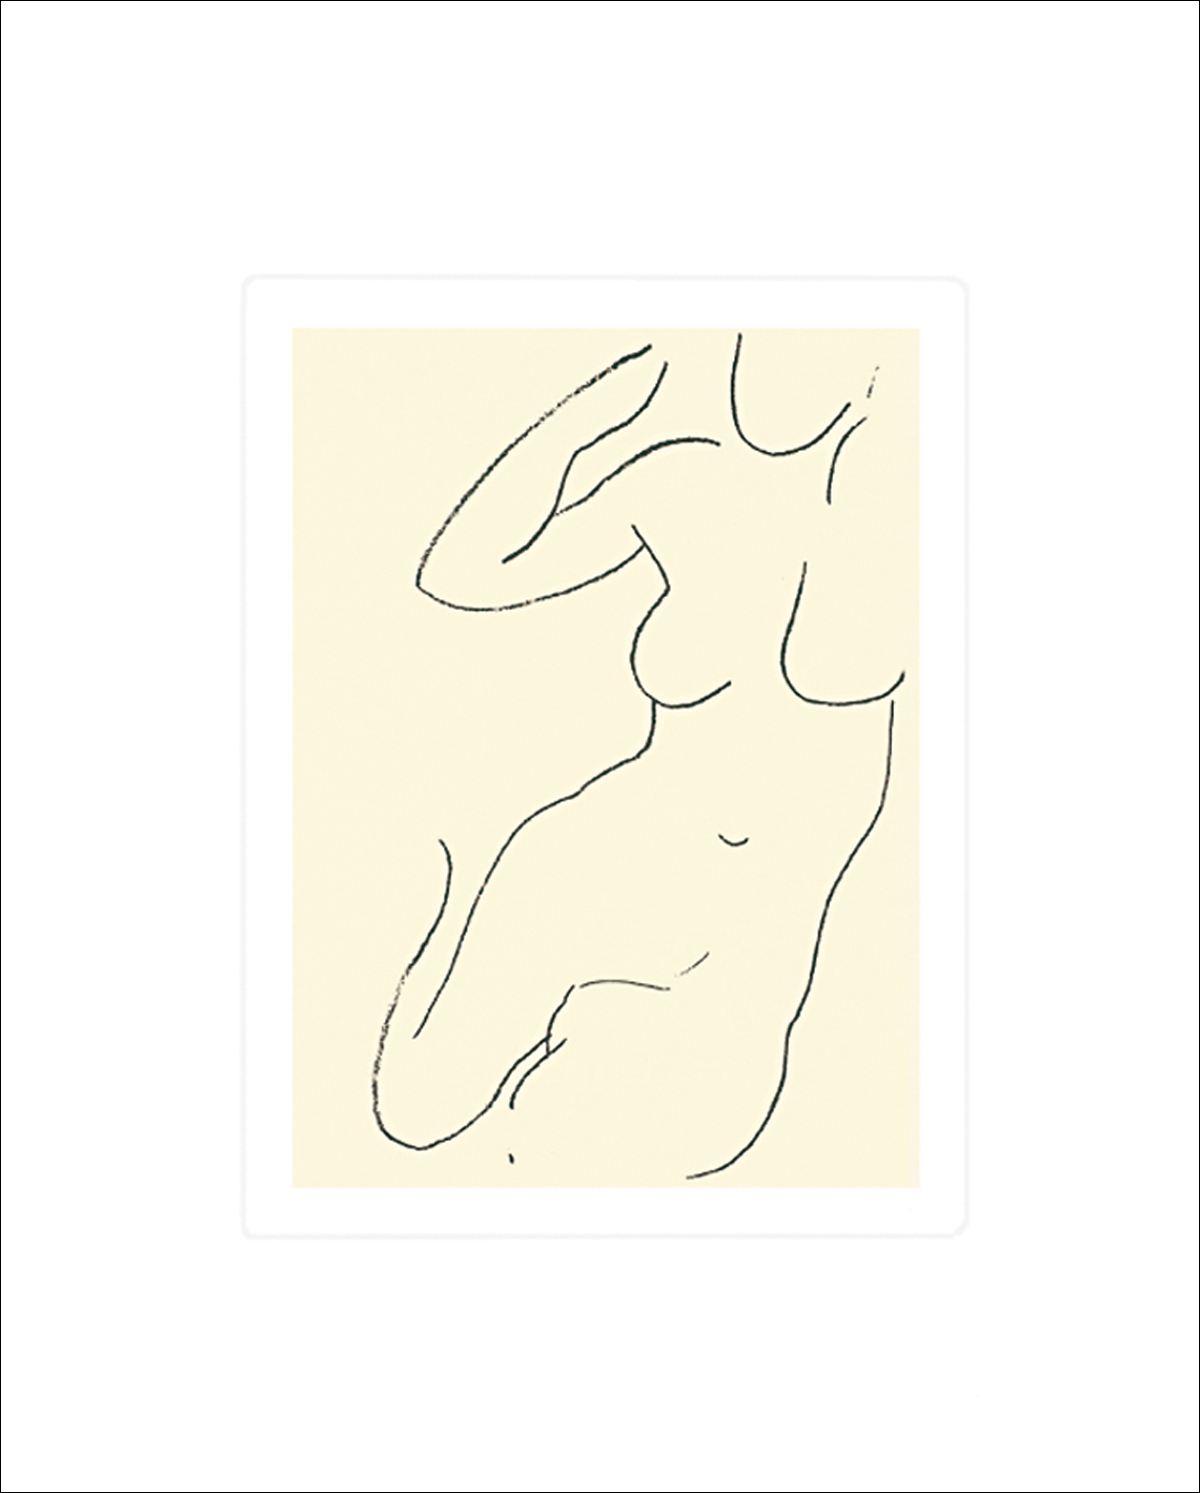 Matisse, H.: Sirene